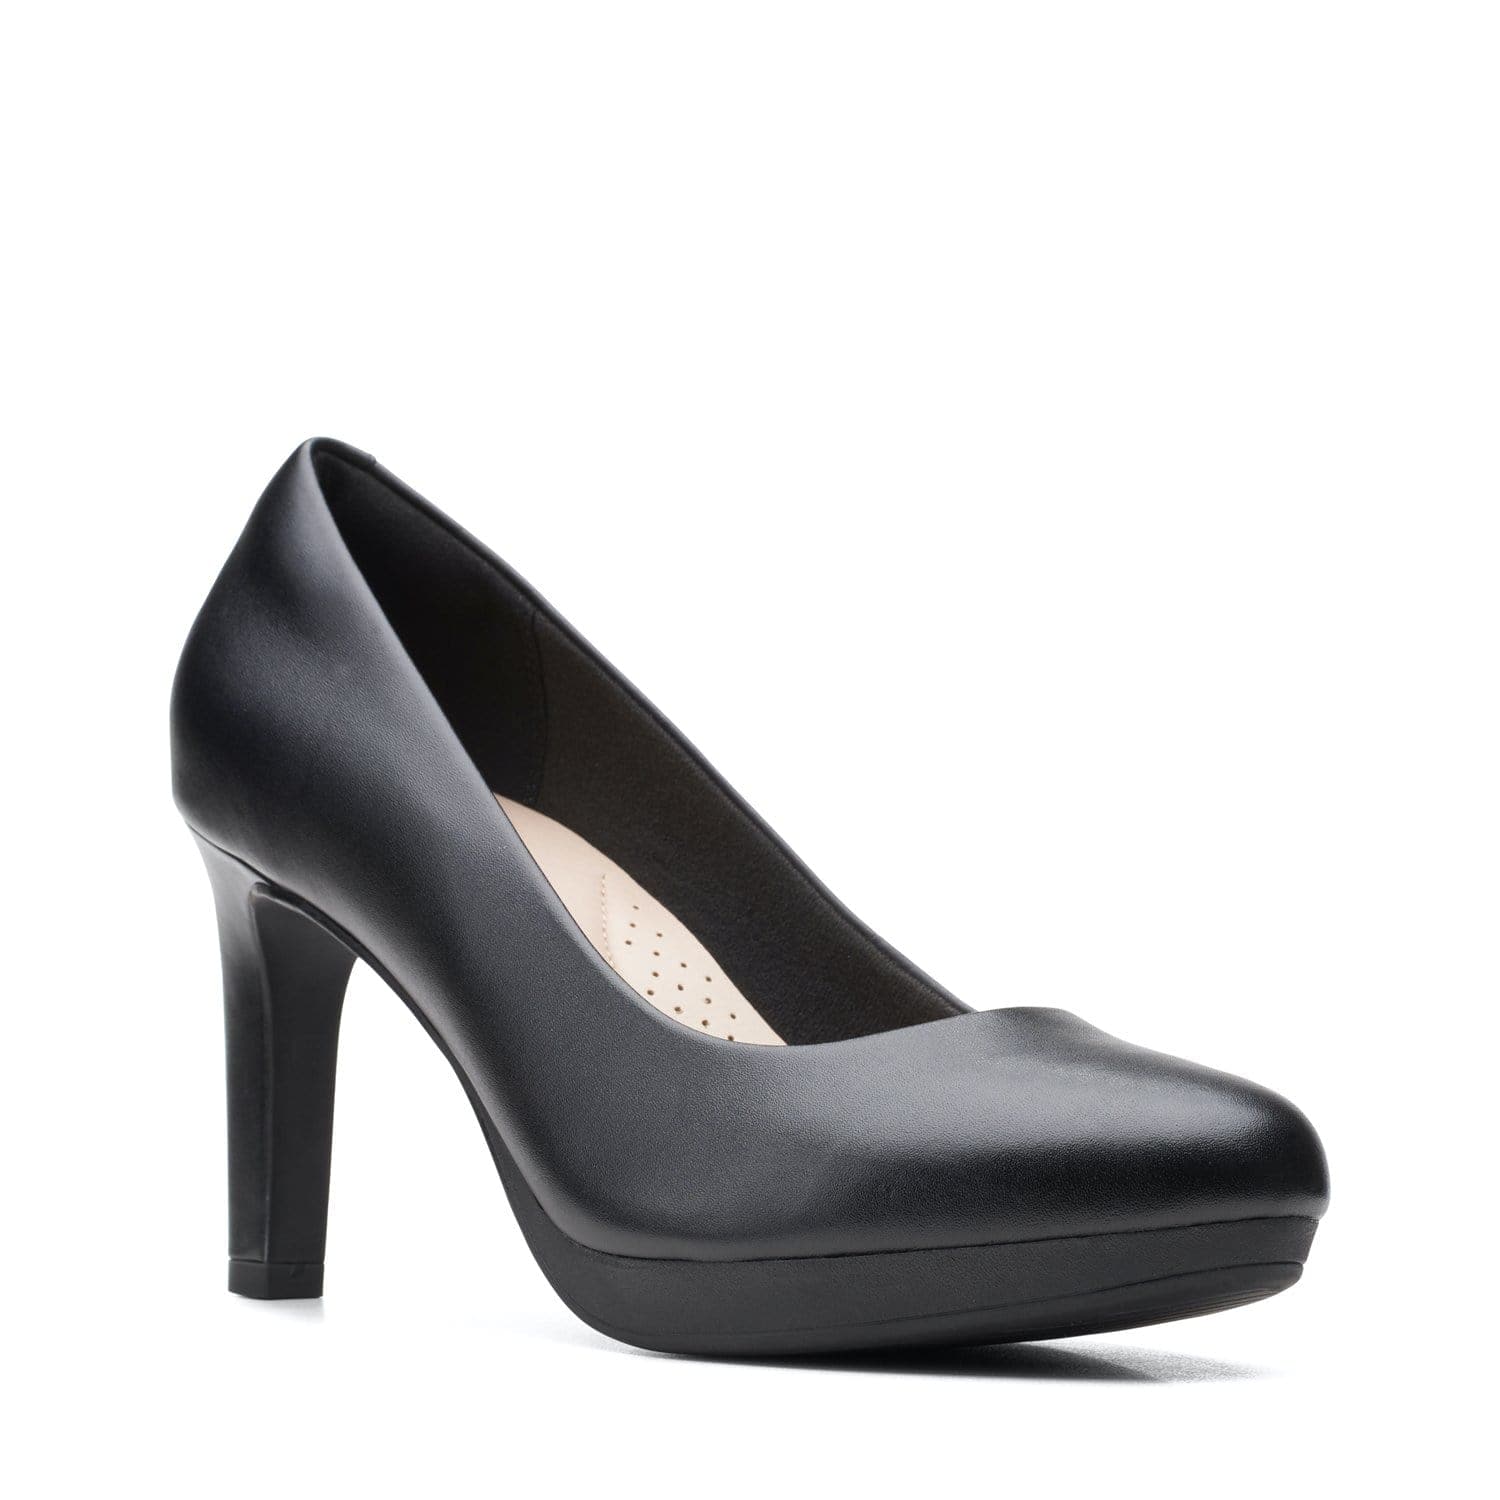 Clarks Ambyr Joy - Shoes - Black Leather - 261577644 - D Width (Standard Fit)